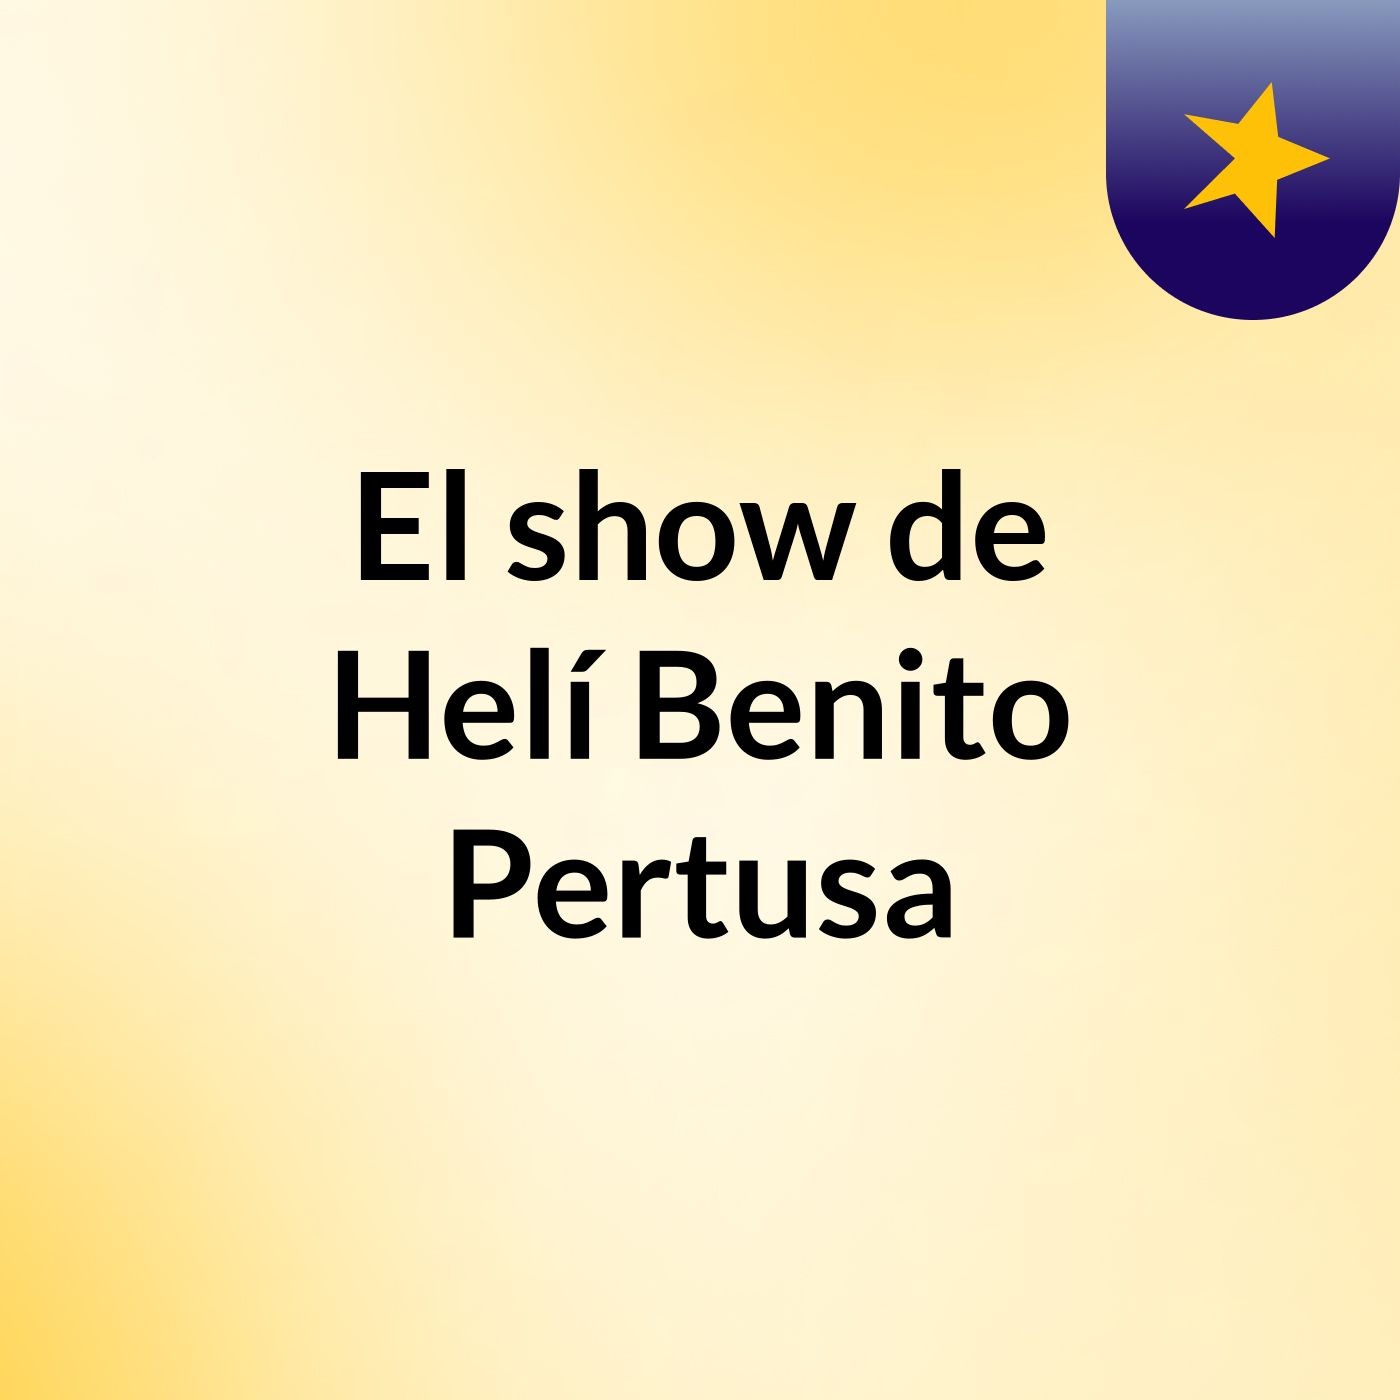 El show de Helí Benito Pertusa